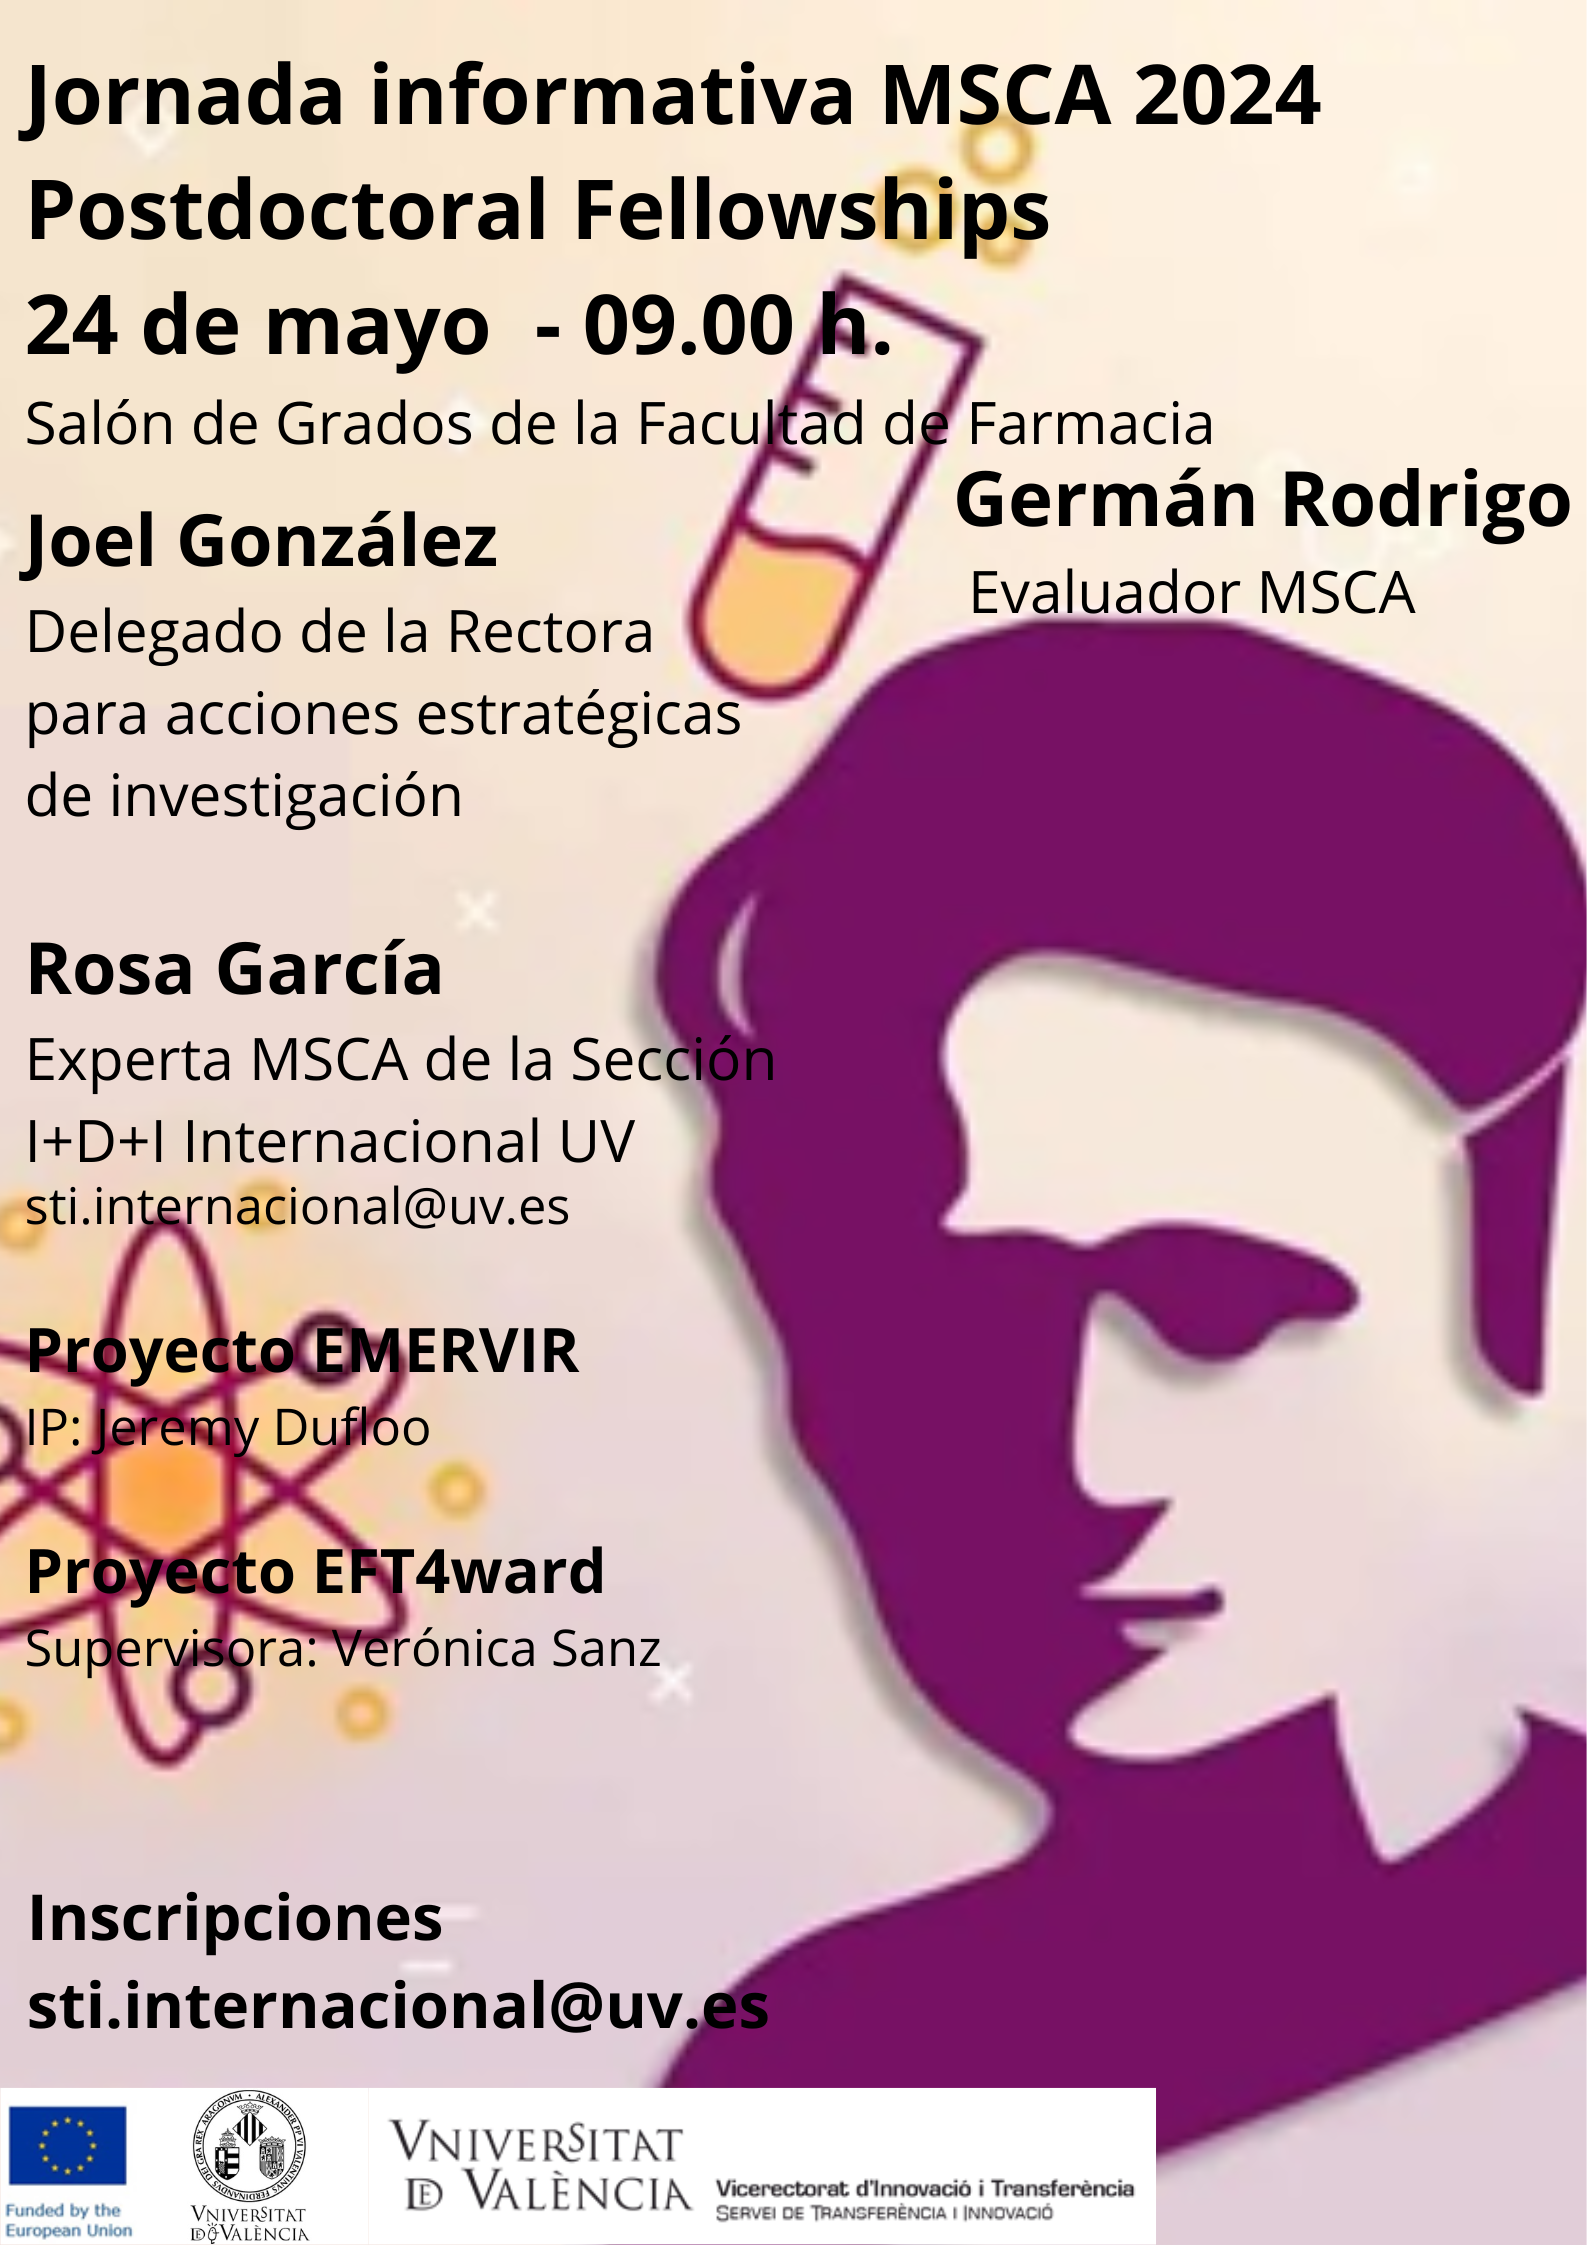 Jornada_MSCA_PF_2024_Farmacia_Universitat_de_Valencia